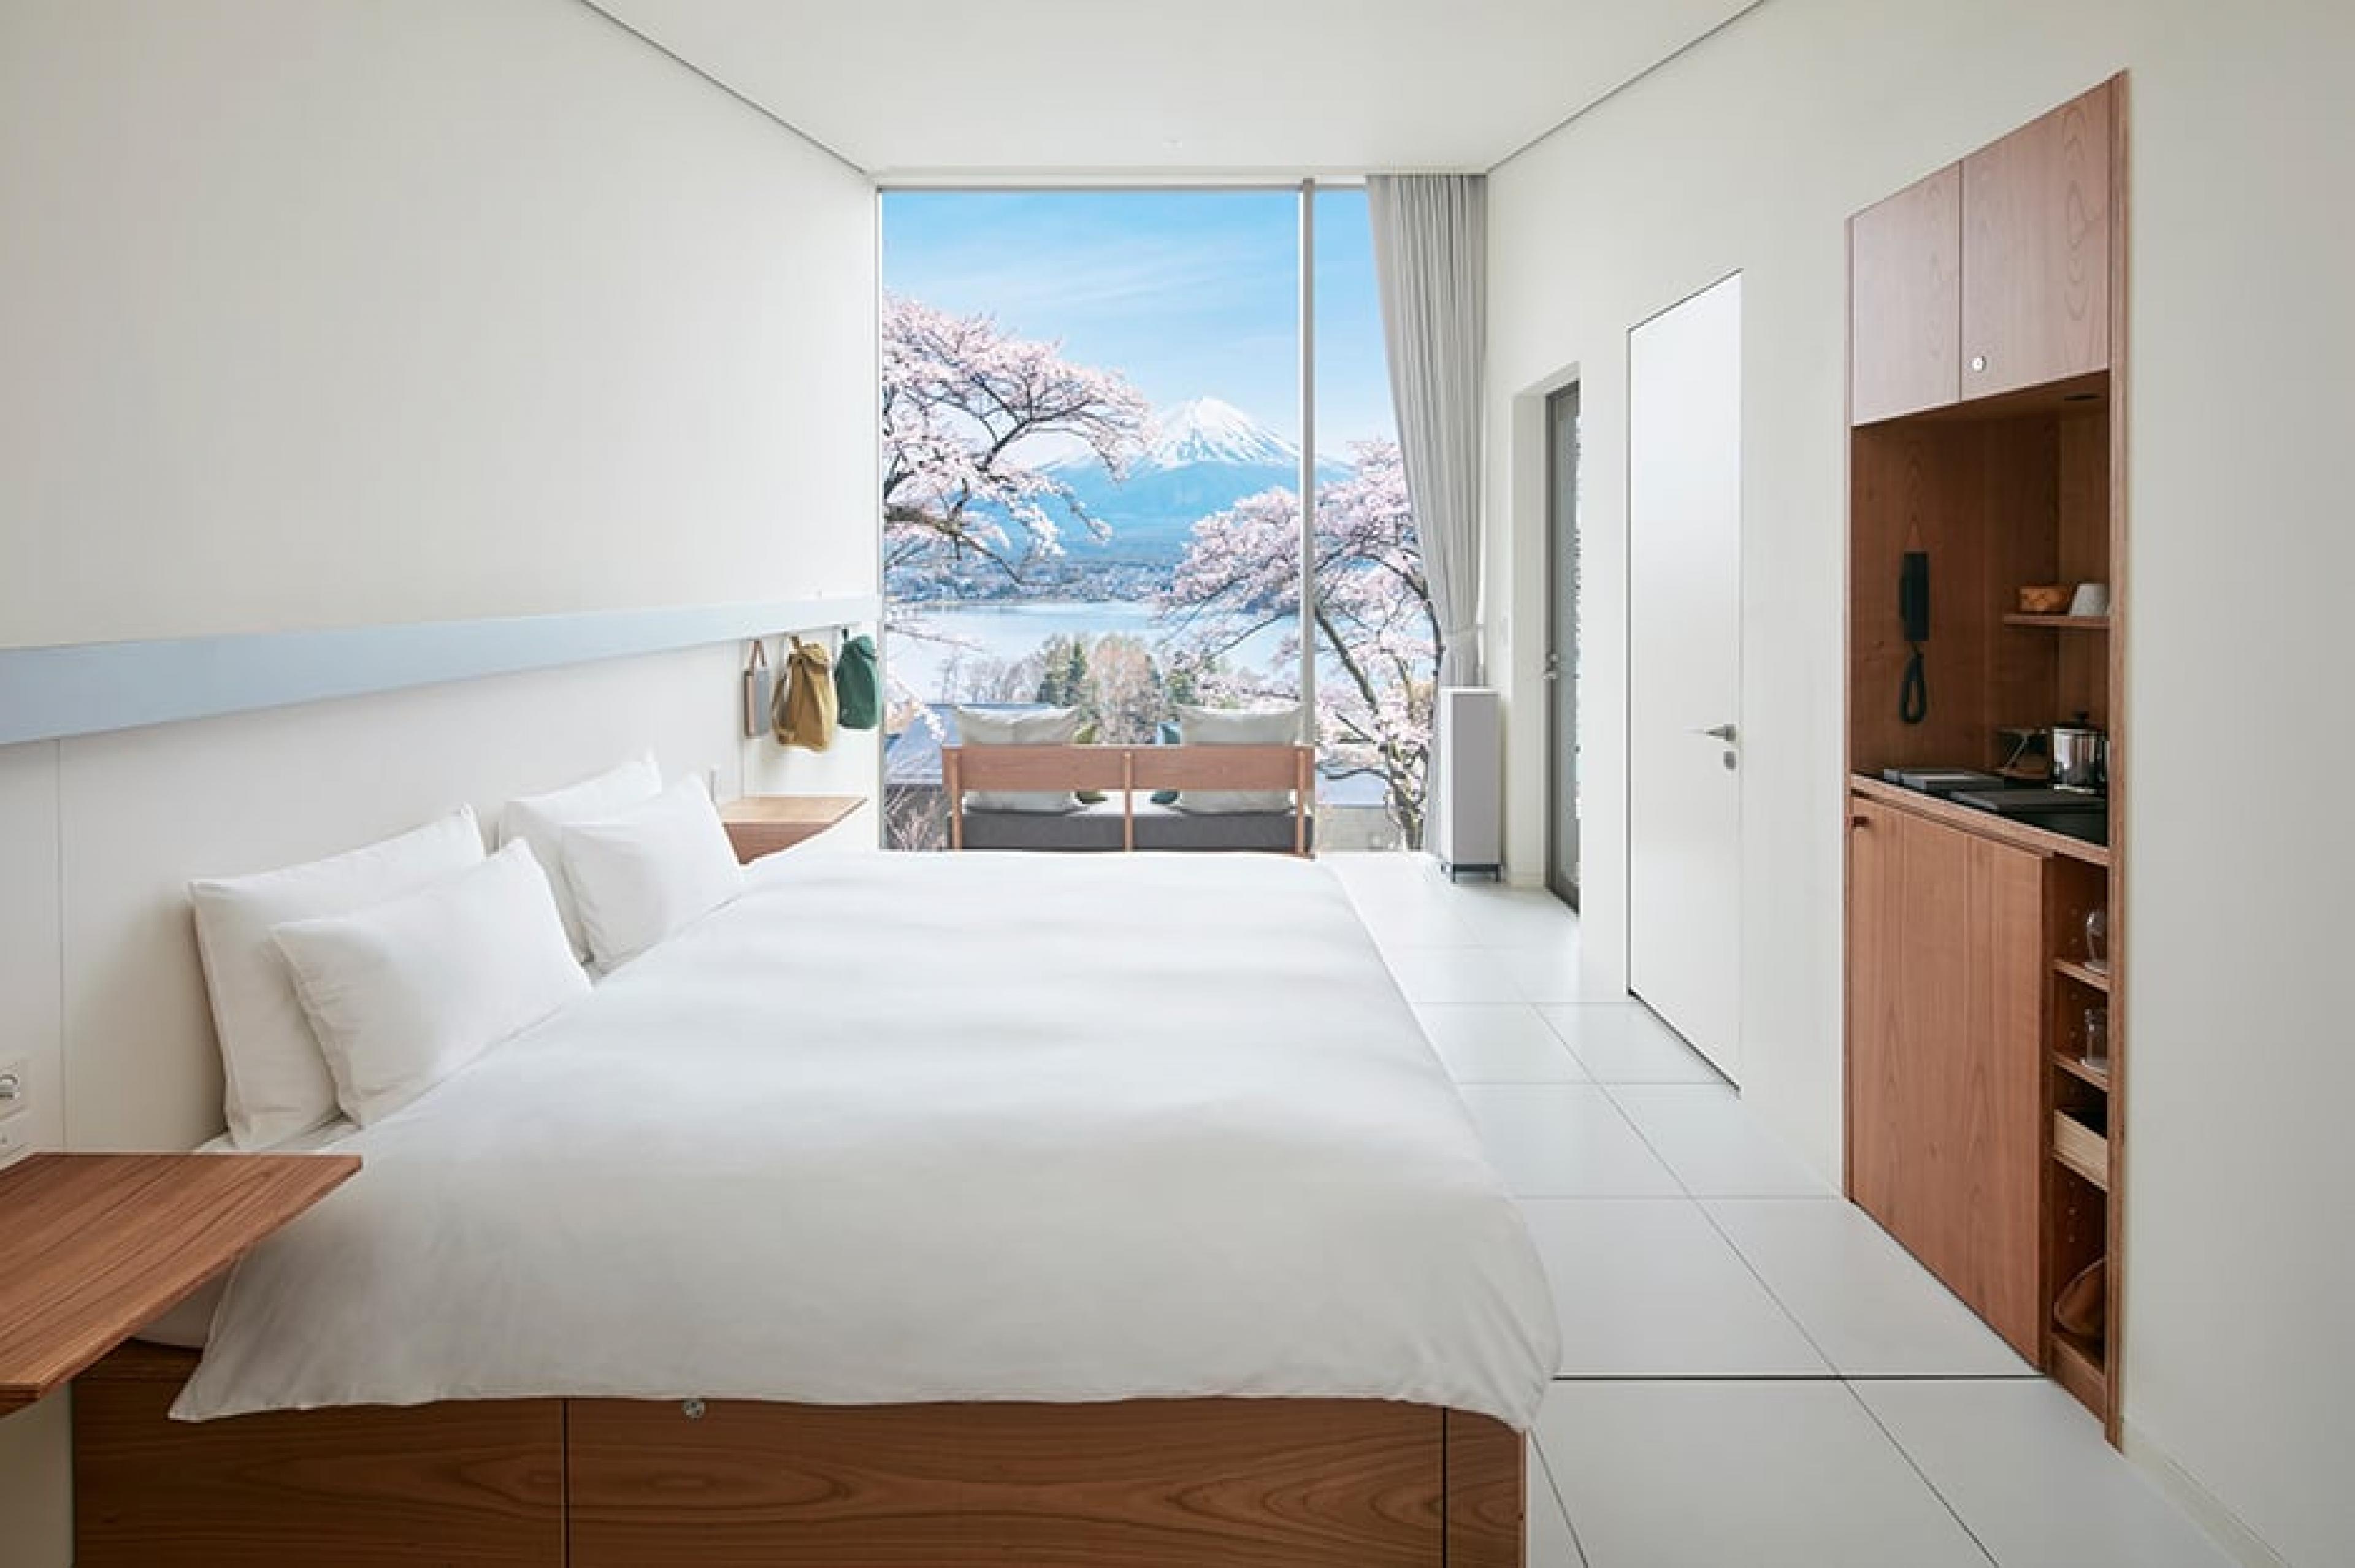 A room at Hoshinoya Fuji